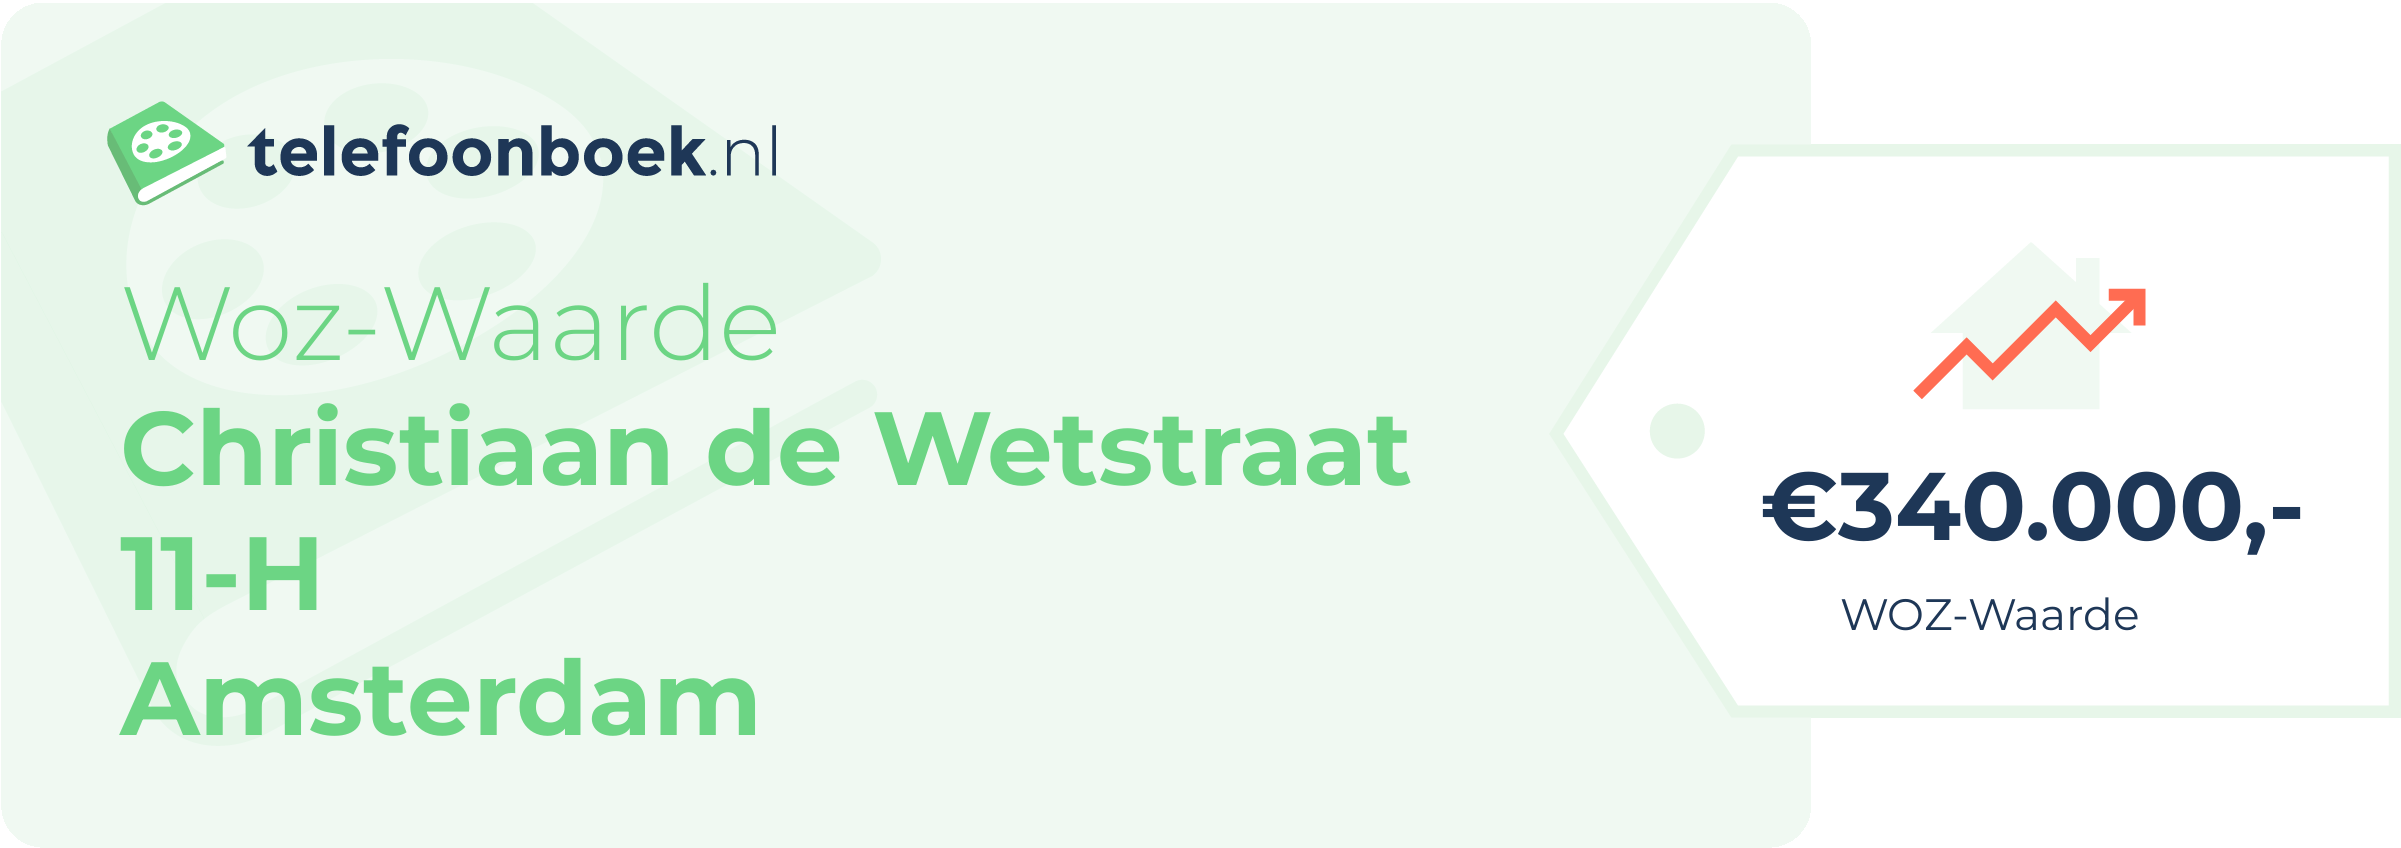 WOZ-waarde Christiaan De Wetstraat 11-H Amsterdam